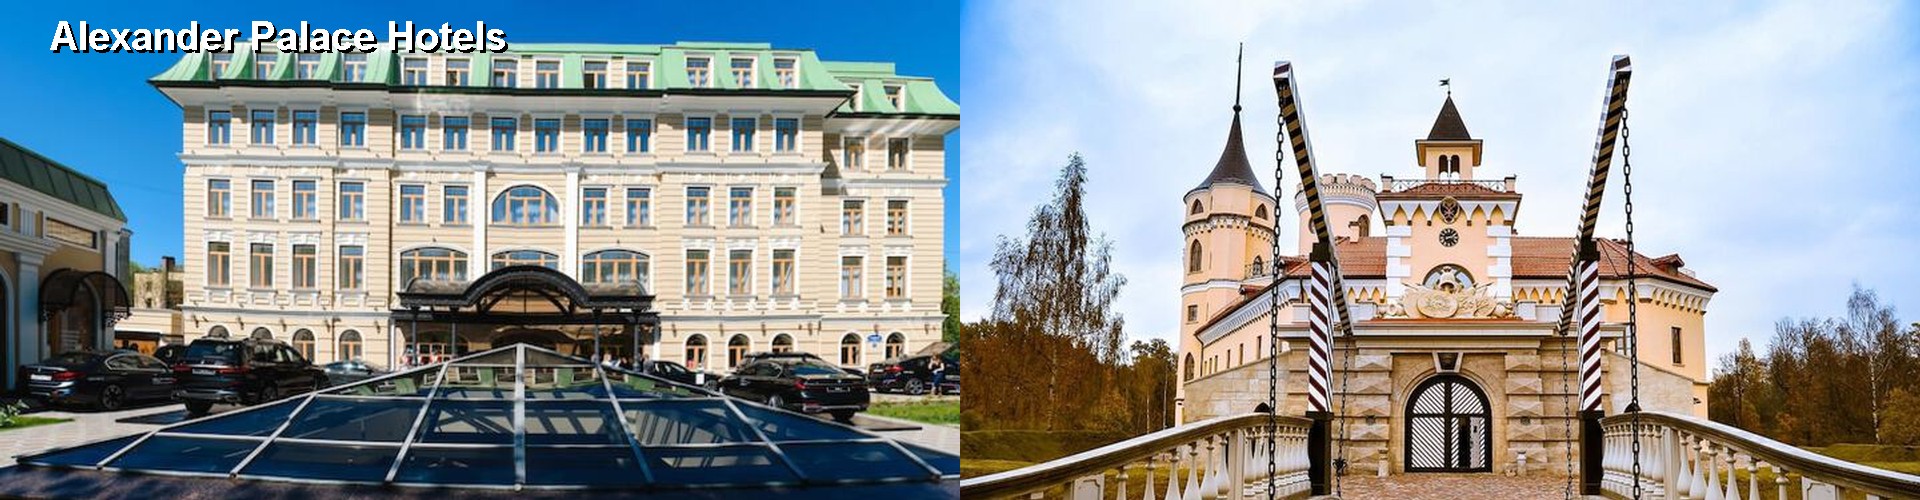 5 Best Hotels near Alexander Palace